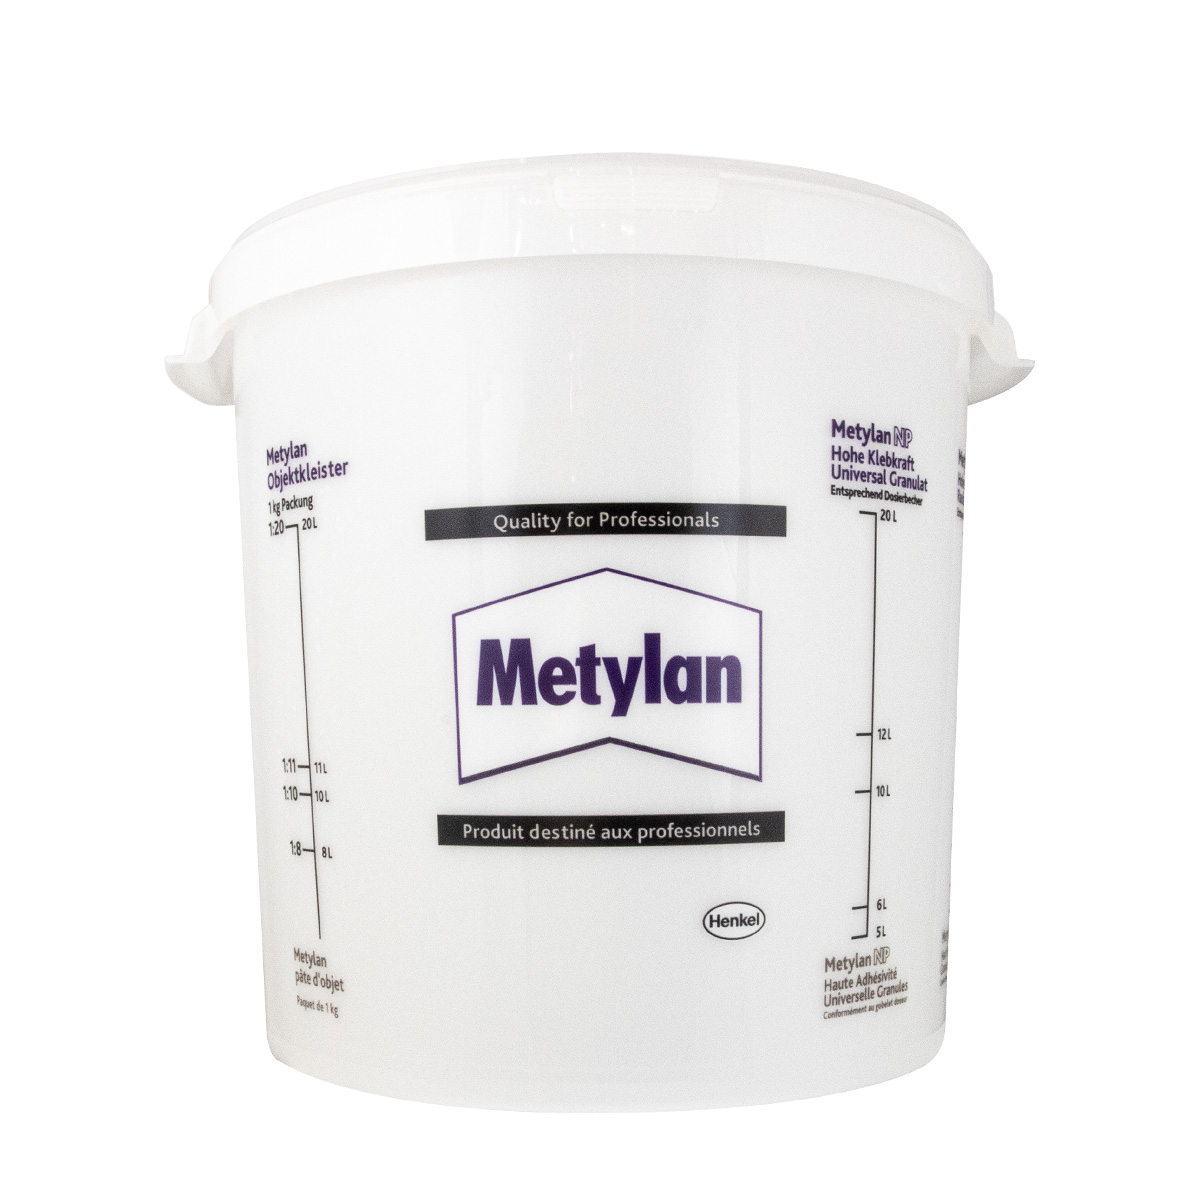 Metylan | online Produkte Farbklecks24 bestellen